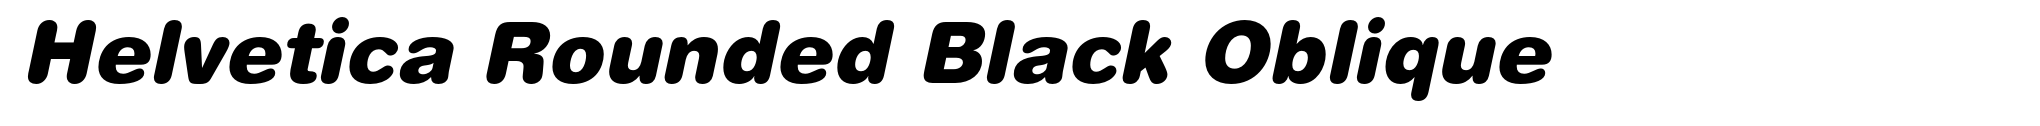 Helvetica Rounded Black Oblique image